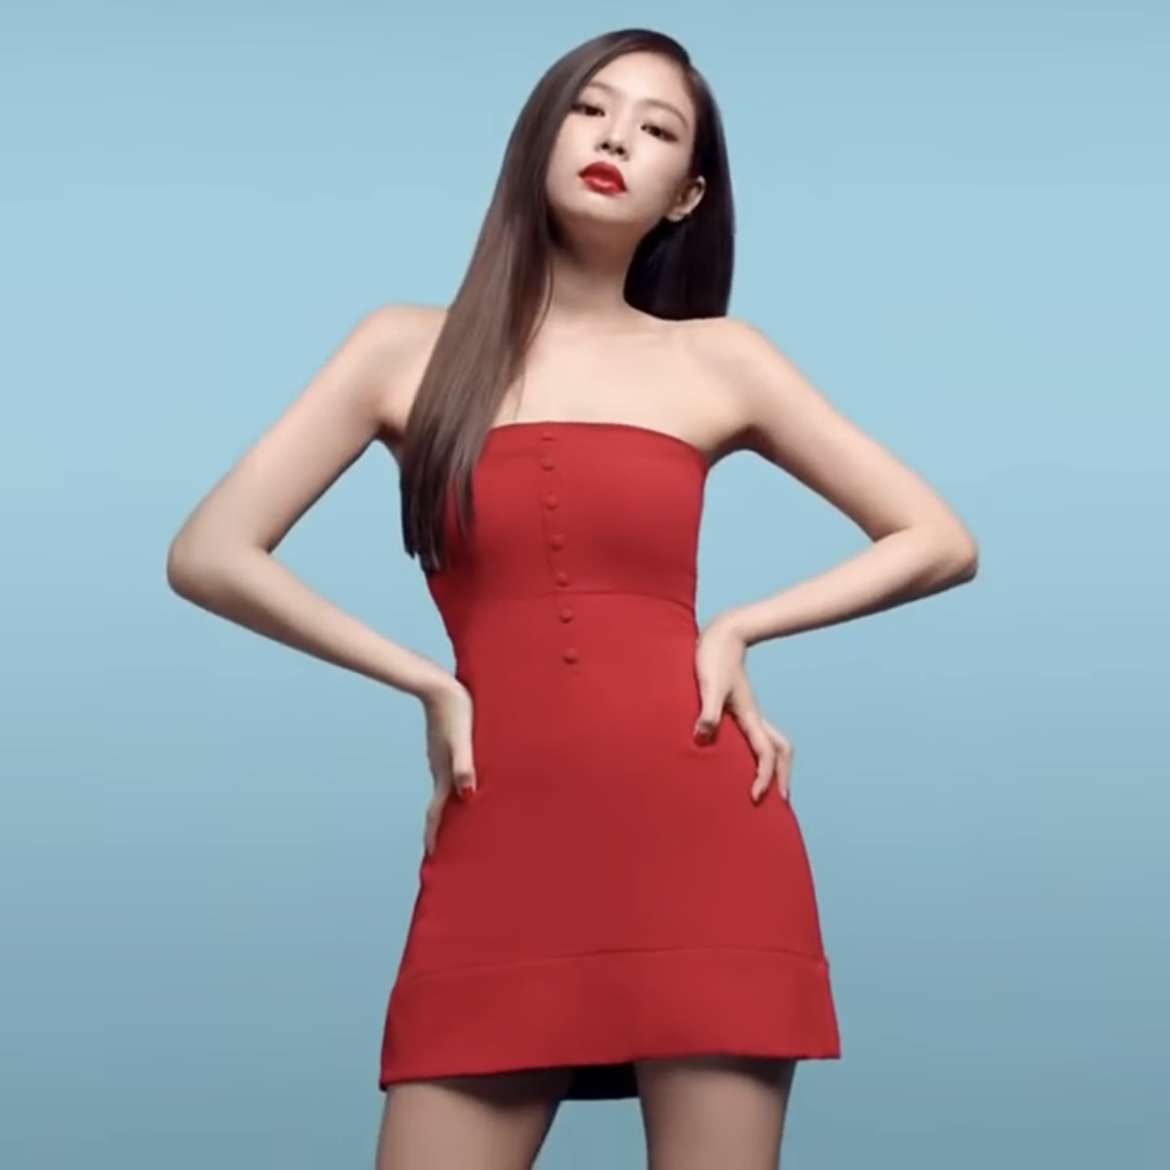 BLACKPINK Jennie - Red Dress online puzzle